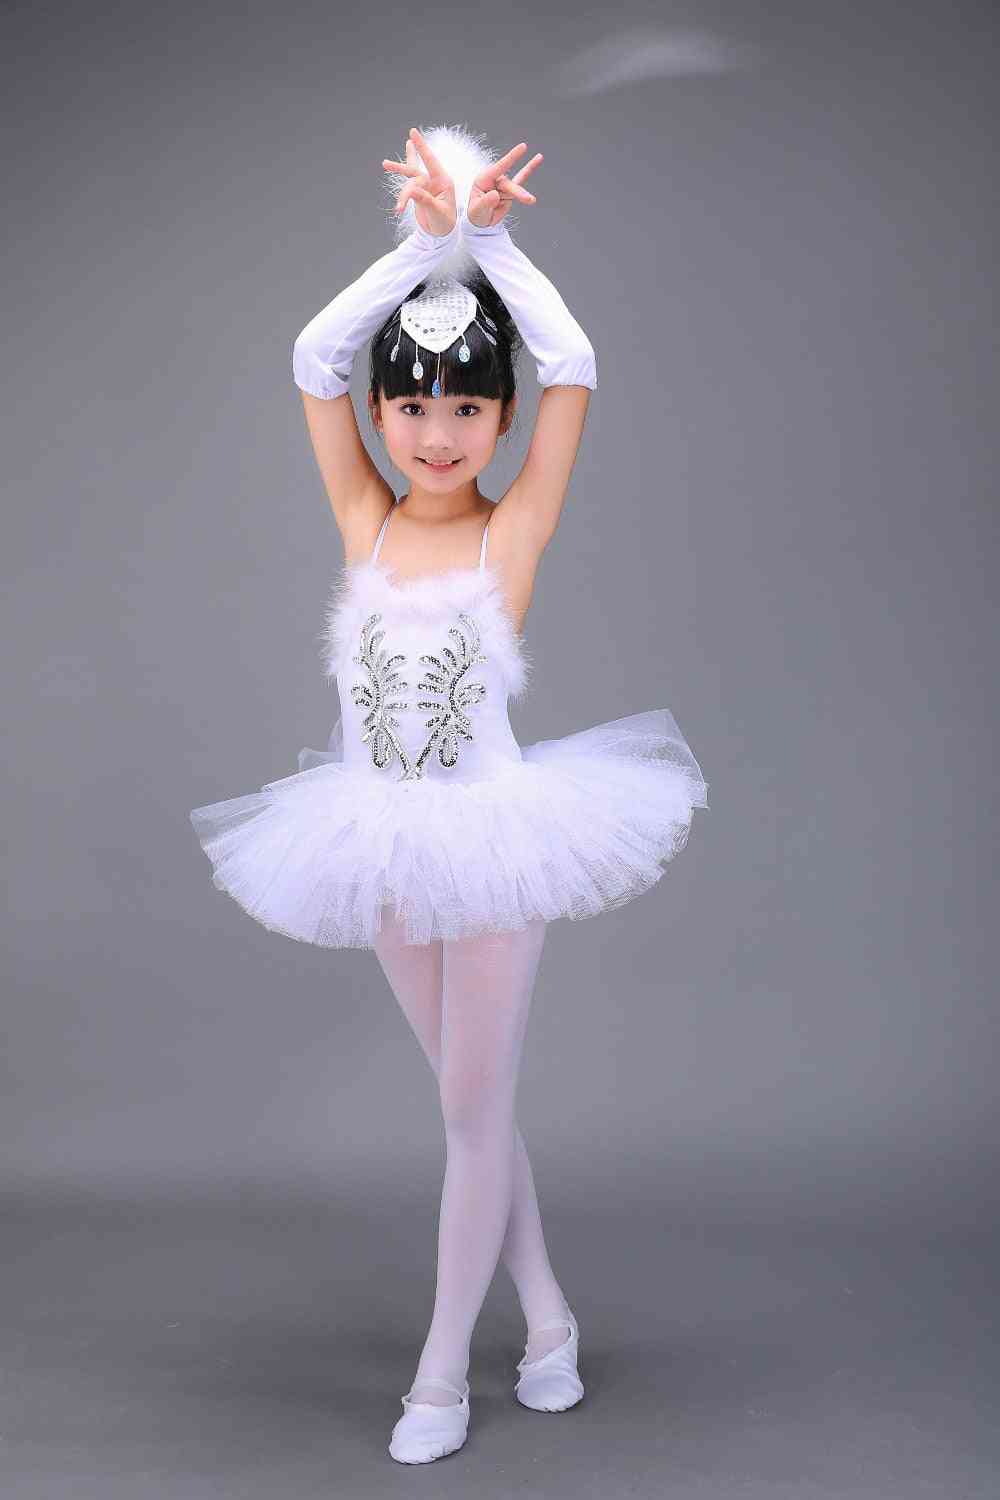 Professional Swan Lake Ballet Tutu Costume,/children/kids Ballet Dancewear